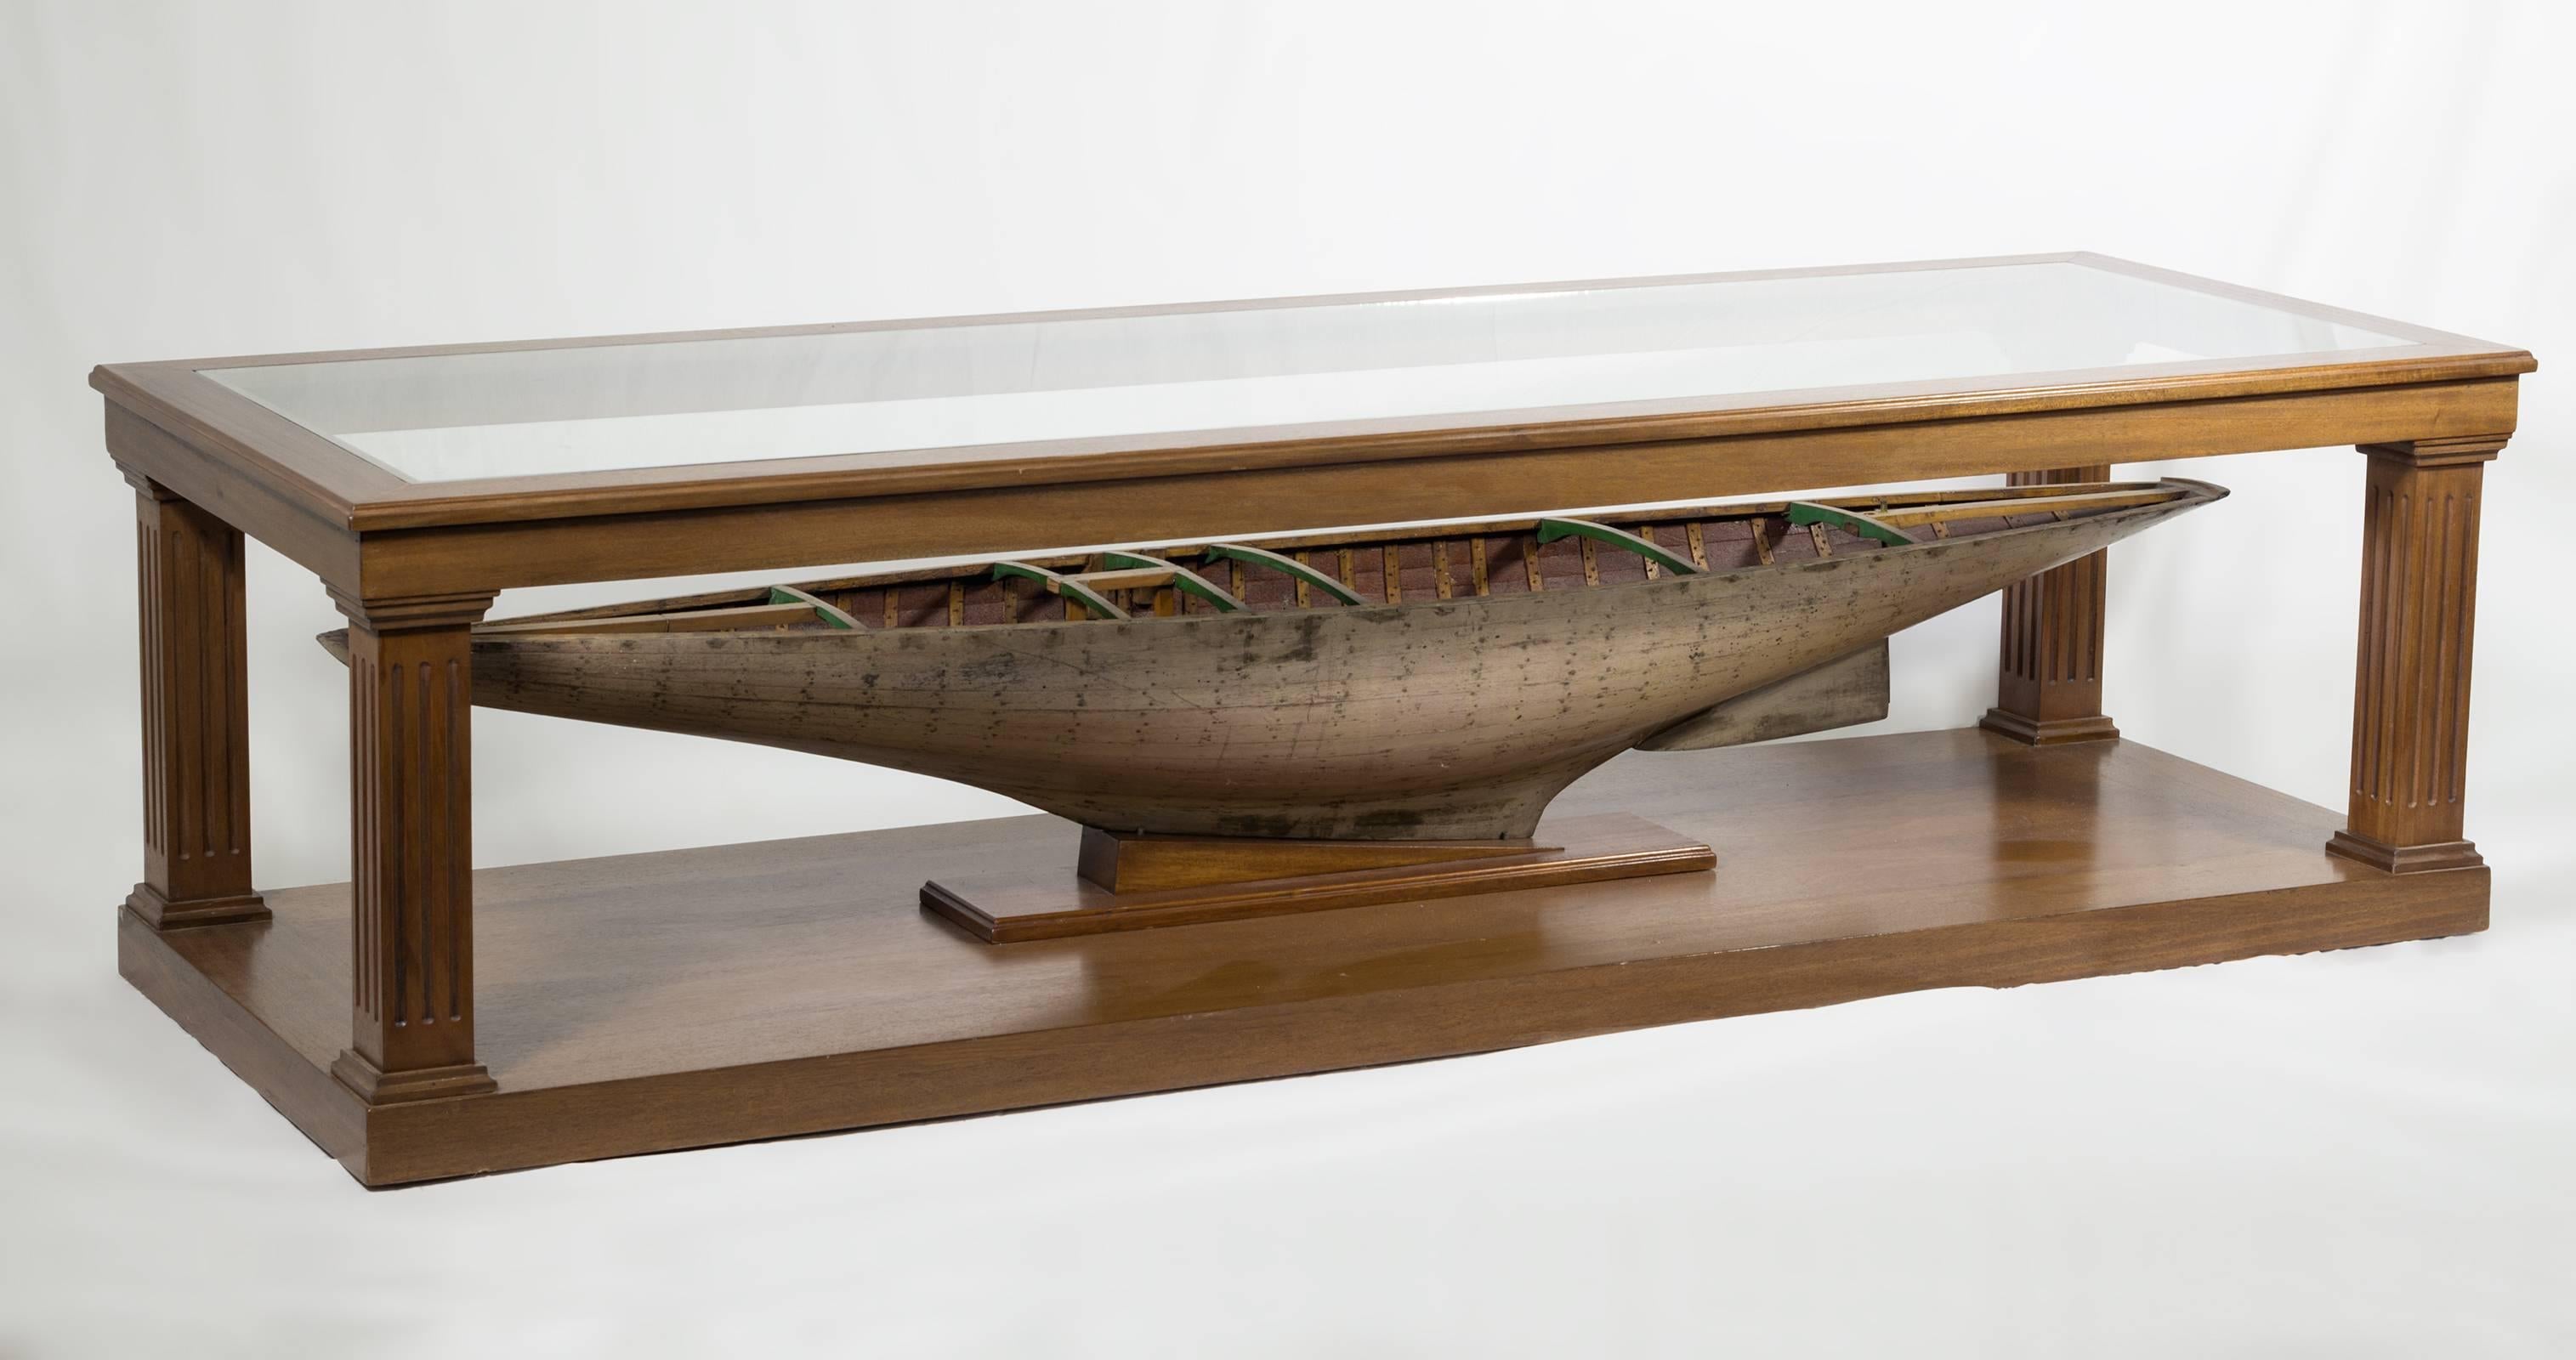 Folk Art Custom-Made Coffee Table with Antique Pond Yacht Model